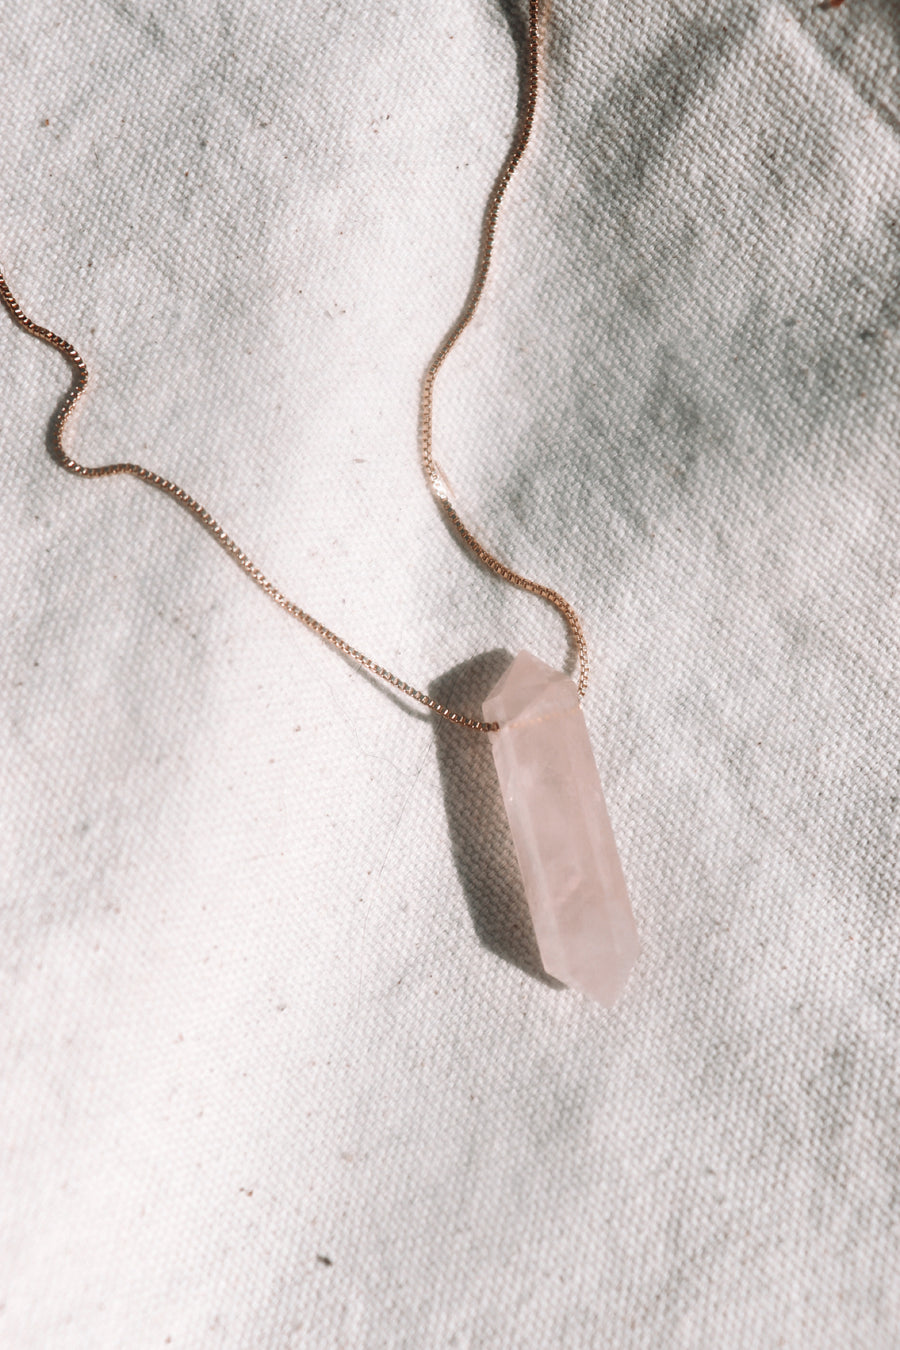 Goddess amulet | Rose quartz point necklace